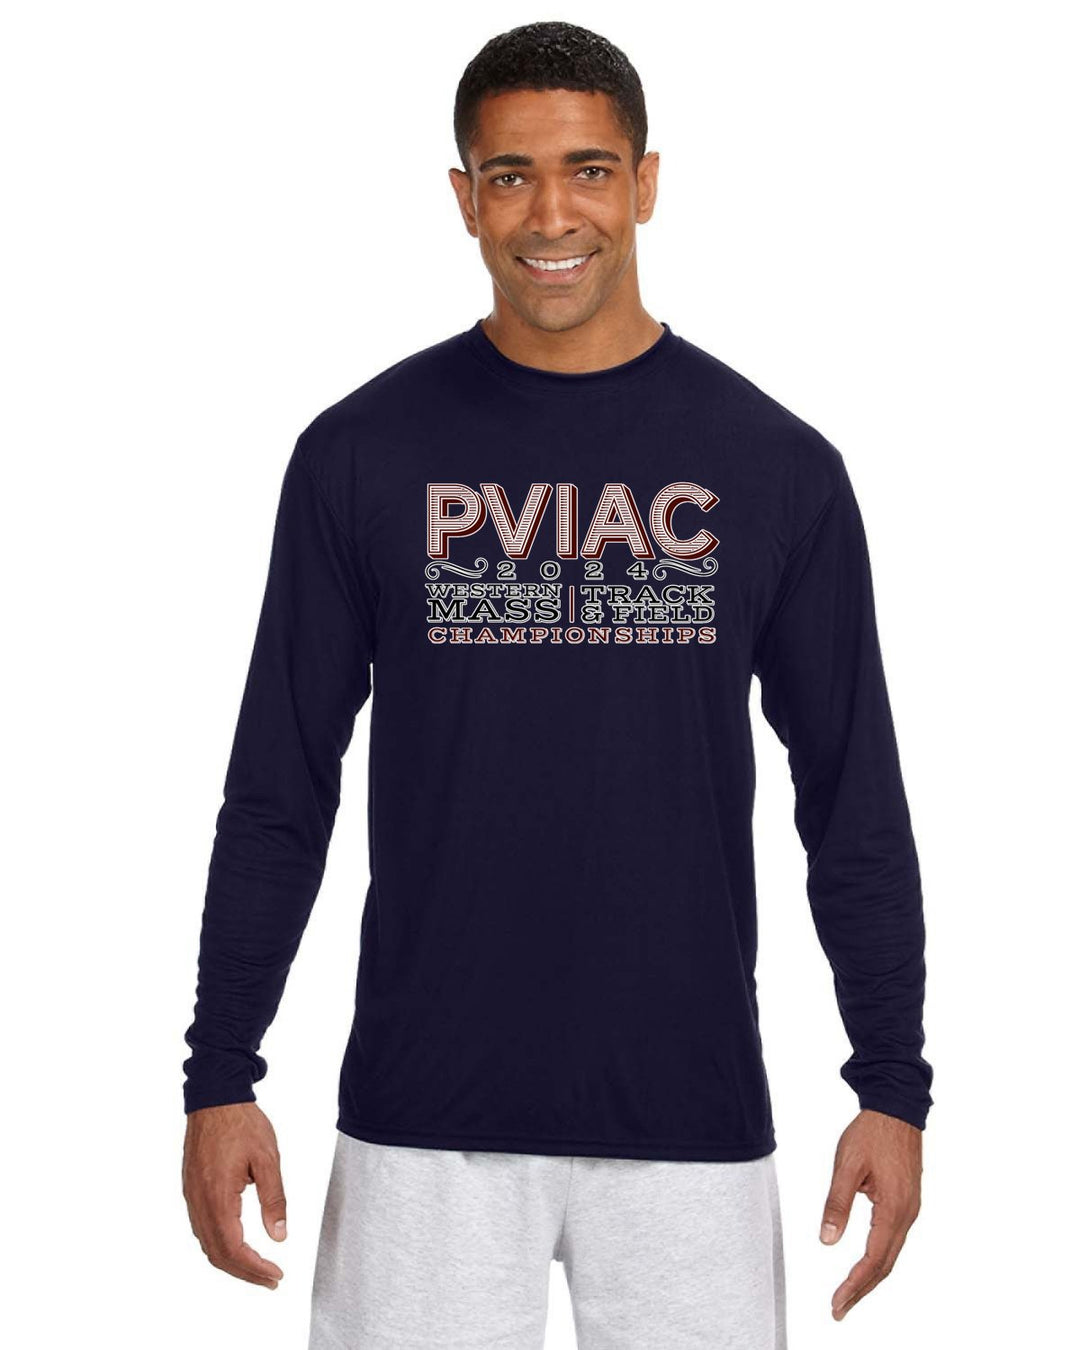 PVIAC Track & Field Championship - Men's Cooling Performance Long Sleeve Tee (N3165)